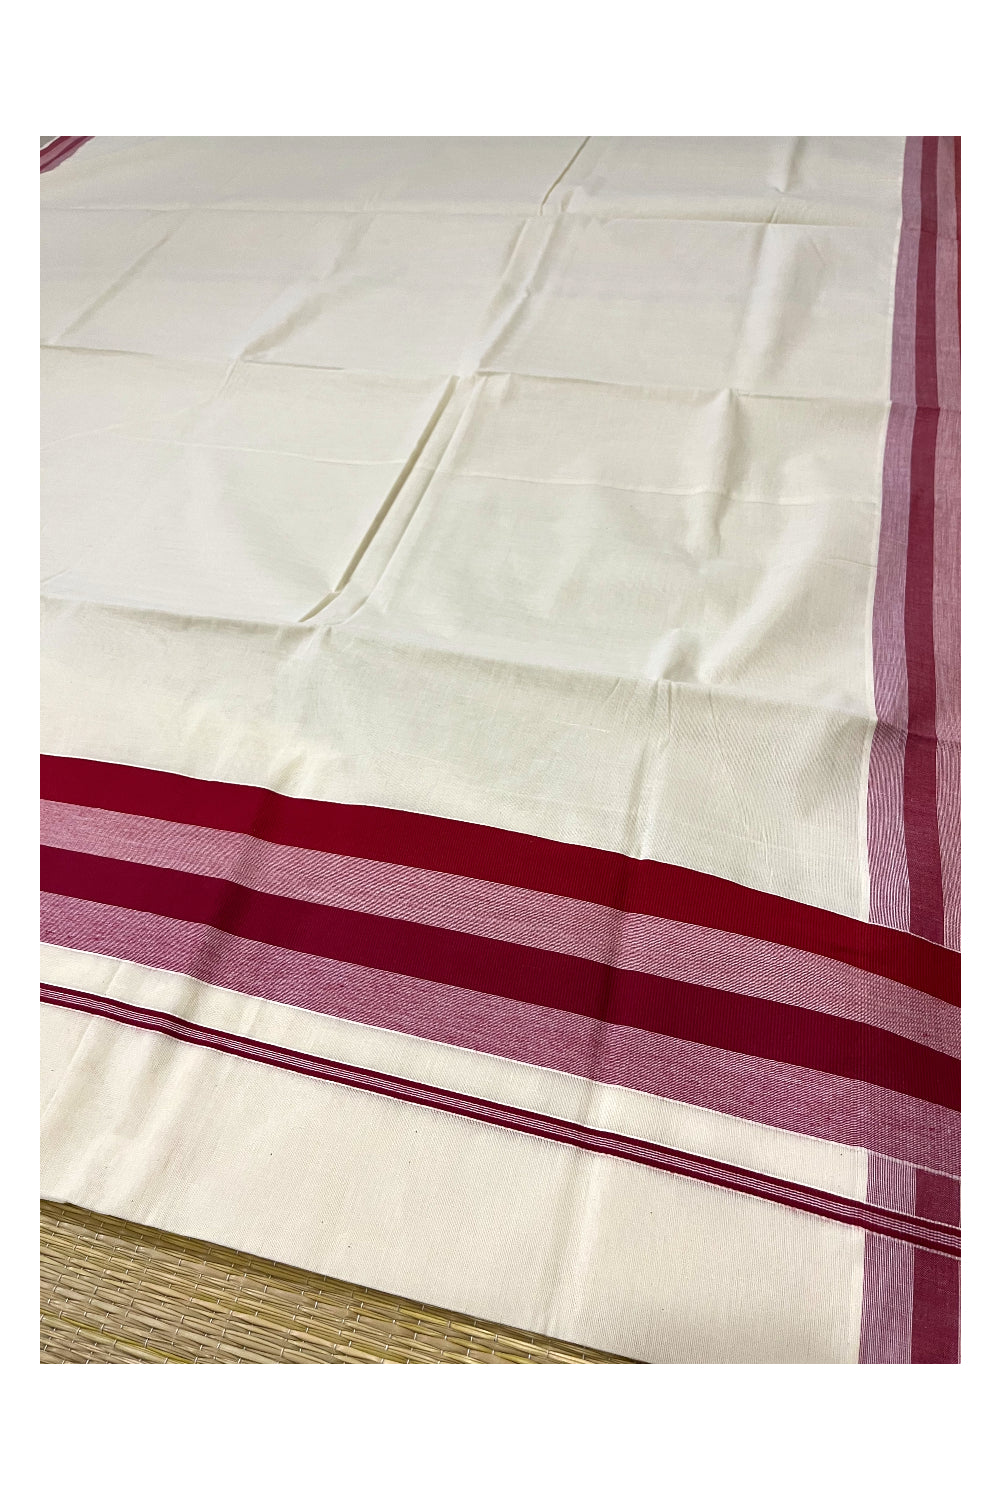 Kerala Pure Cotton Plain Saree with Red Lines Border Design